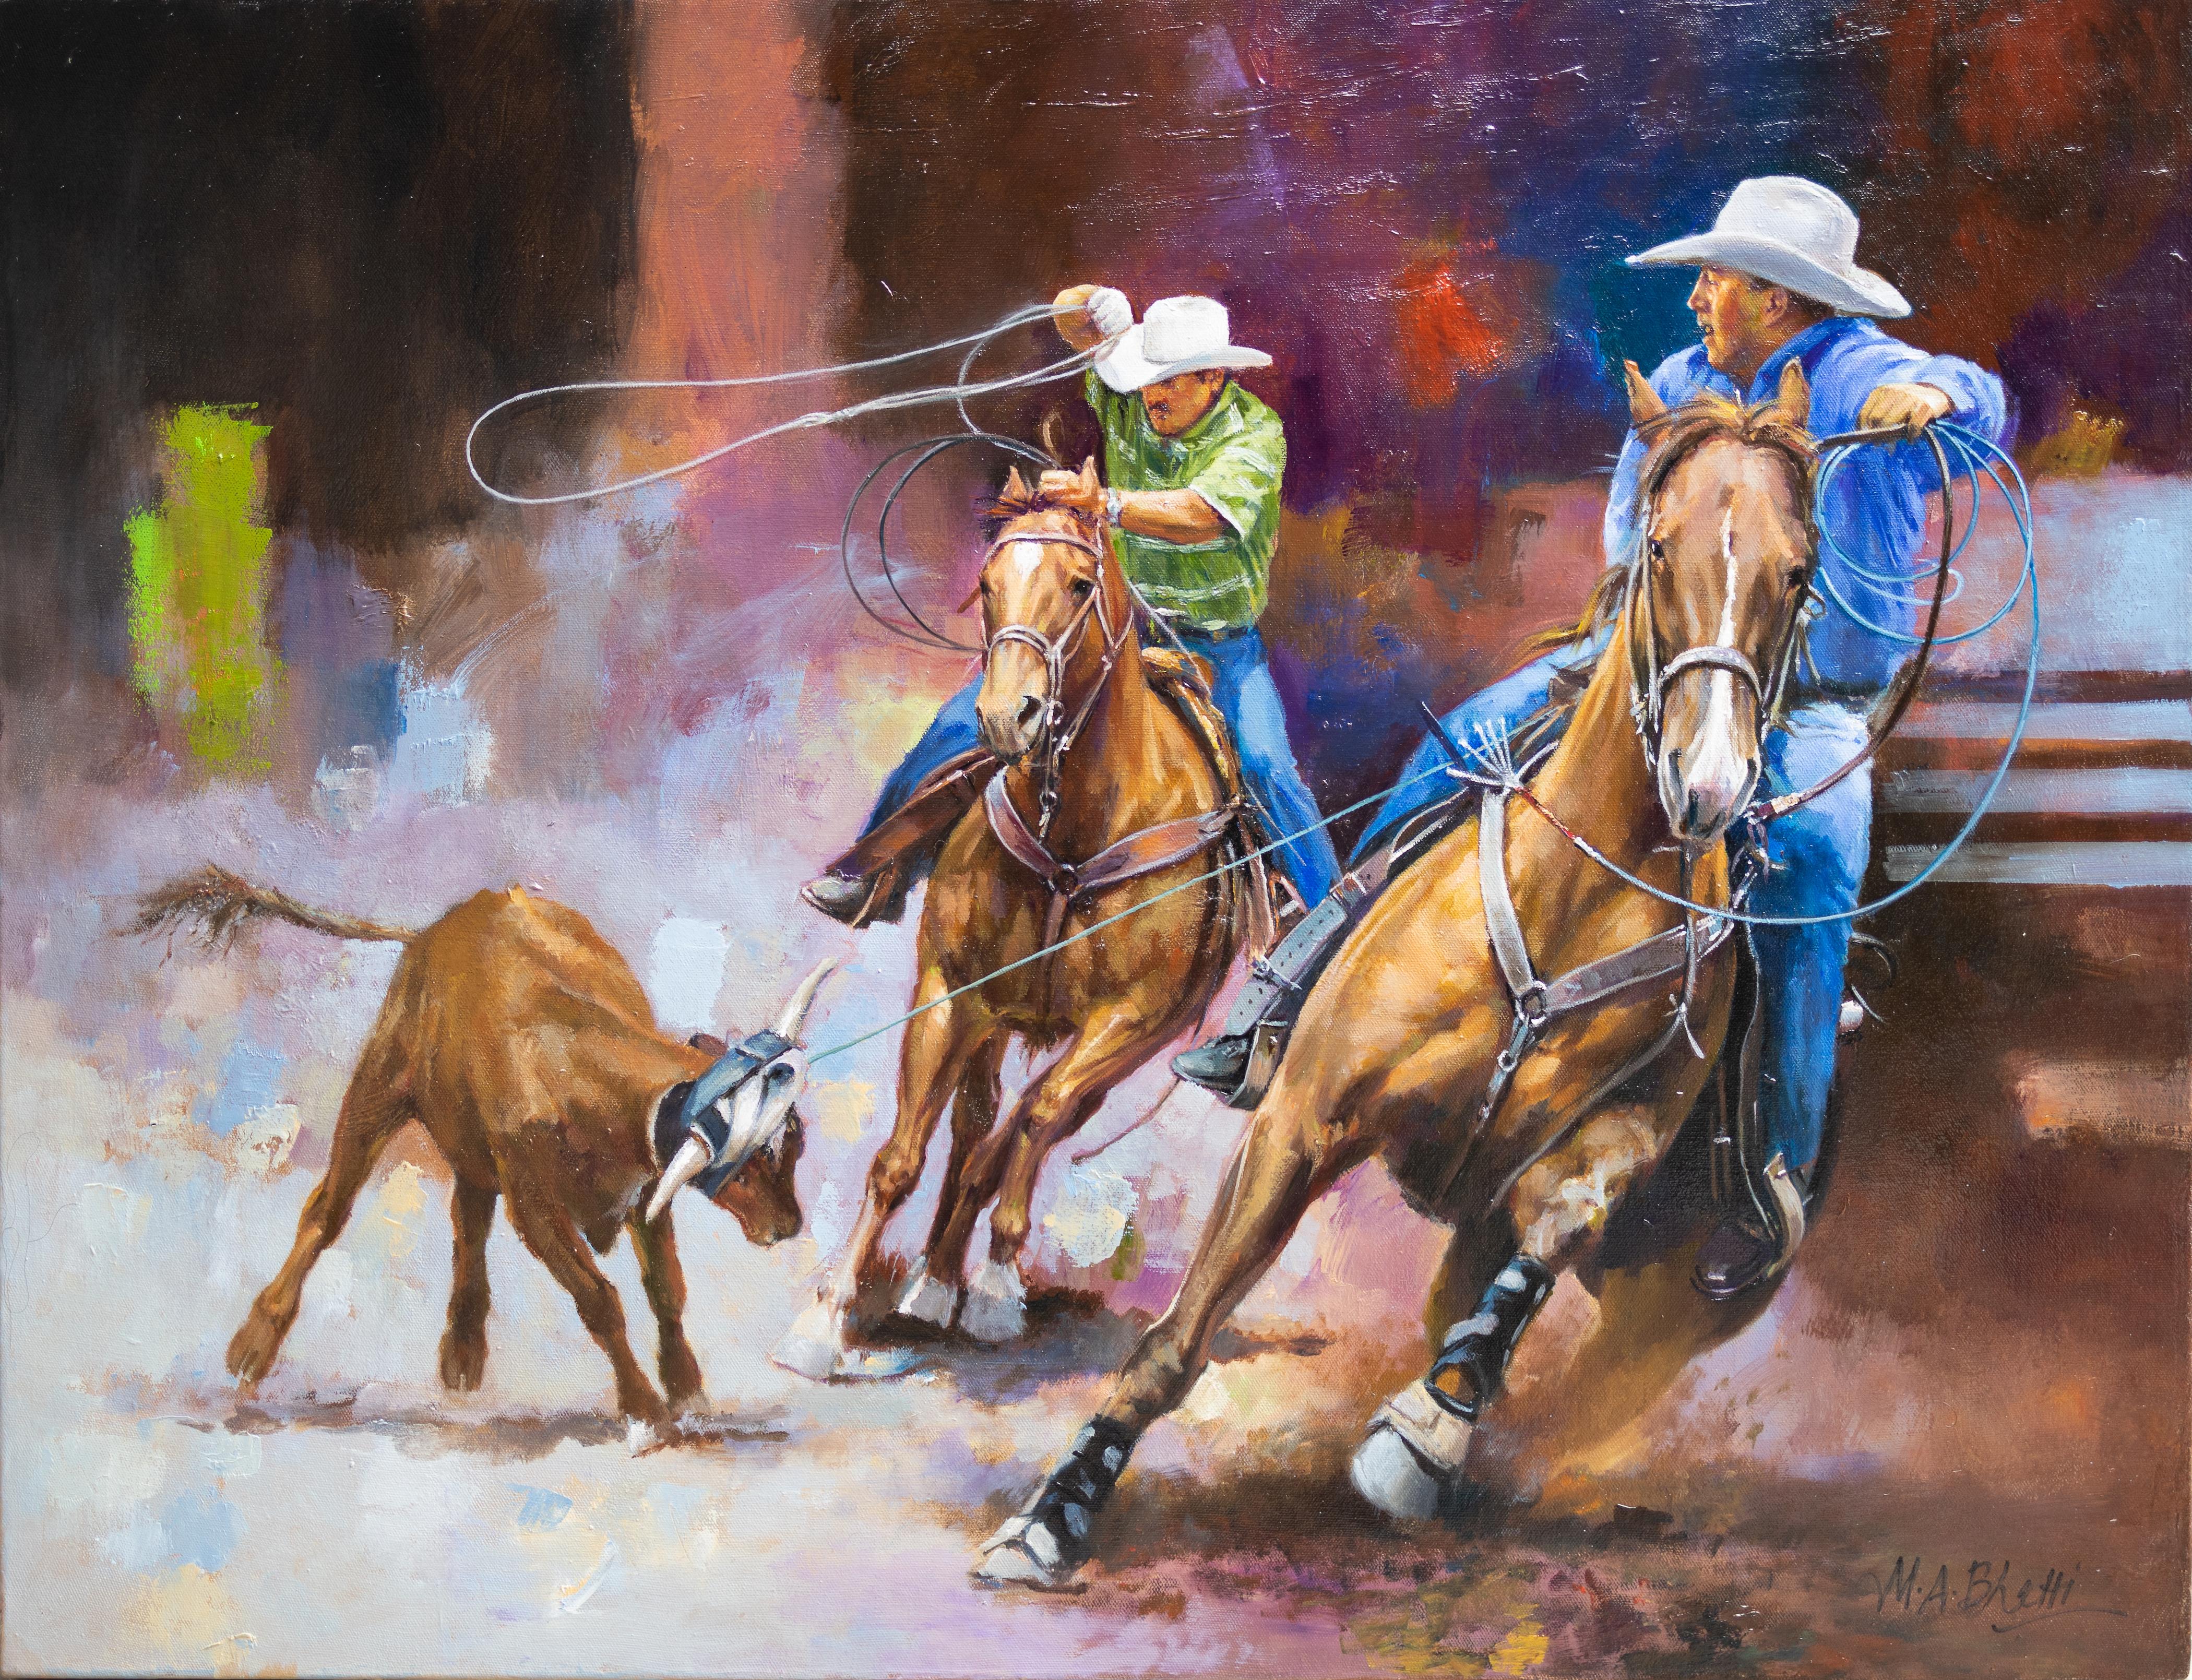 M.A. Bhatti Figurative Painting - "Got 'em Buddy", Western Rodeo Scene, Oil on Canvas